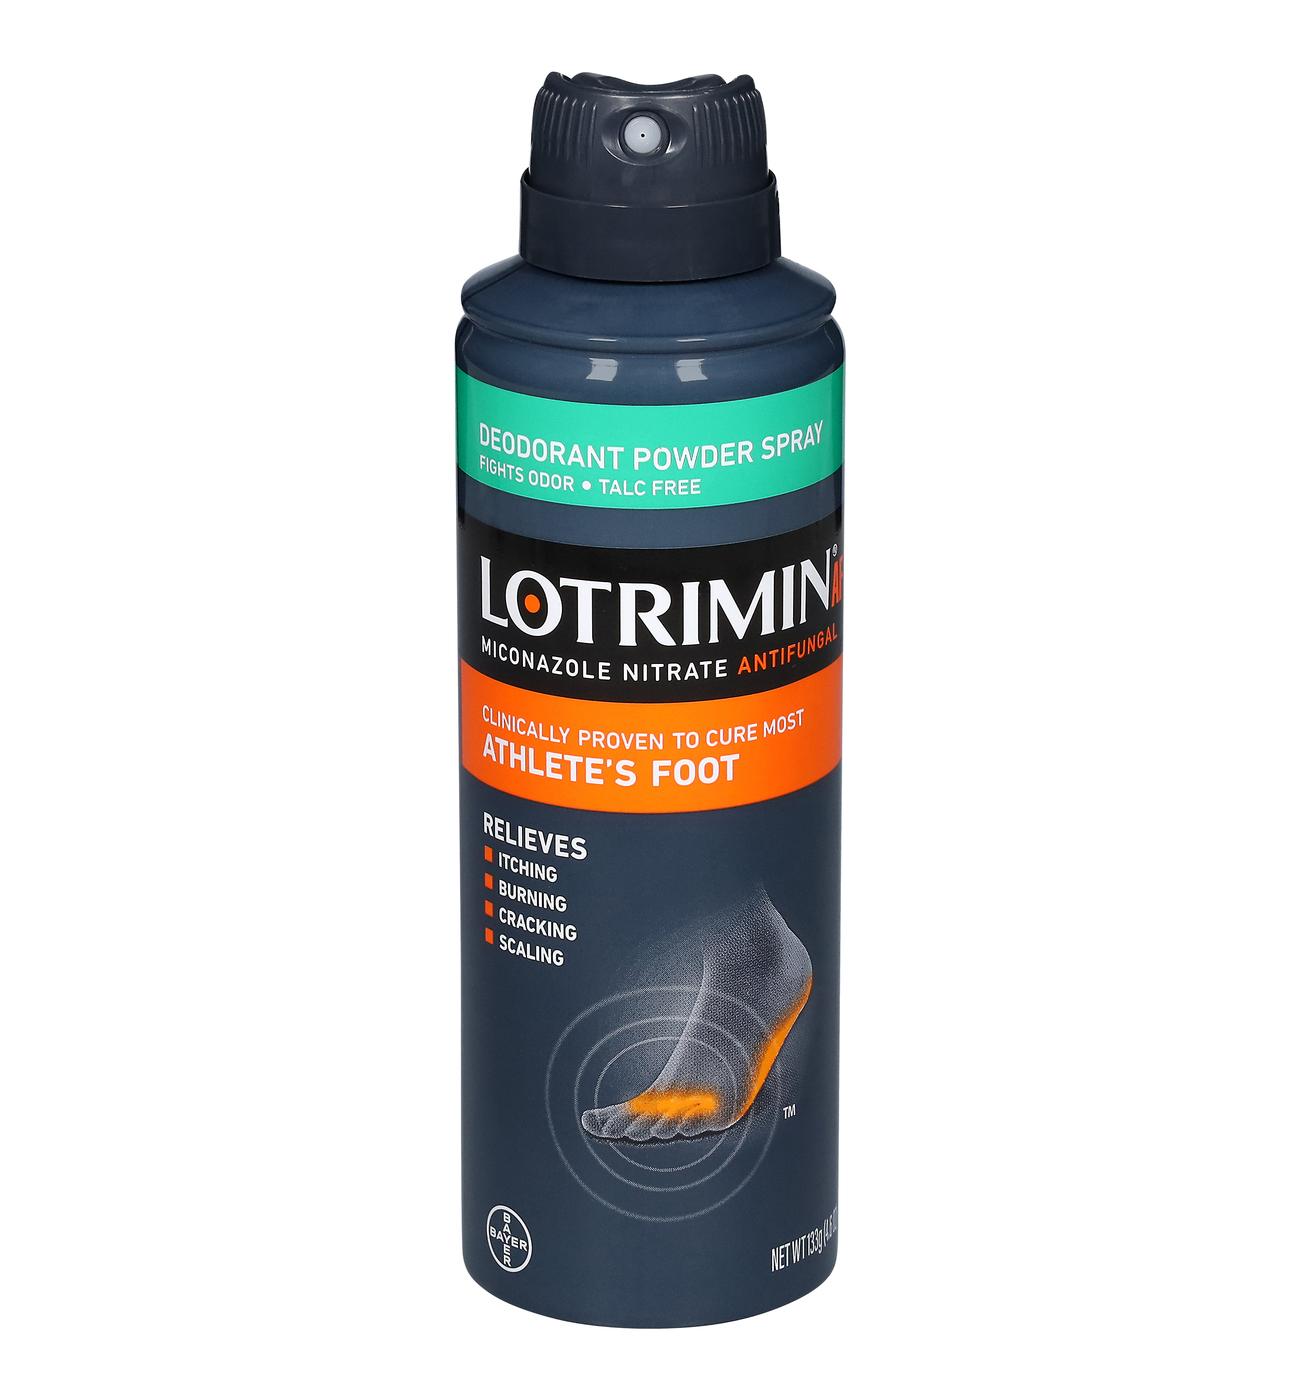 Lotrimin Antifungal Athlete's Foot Deodorant Powder Spray; image 1 of 2